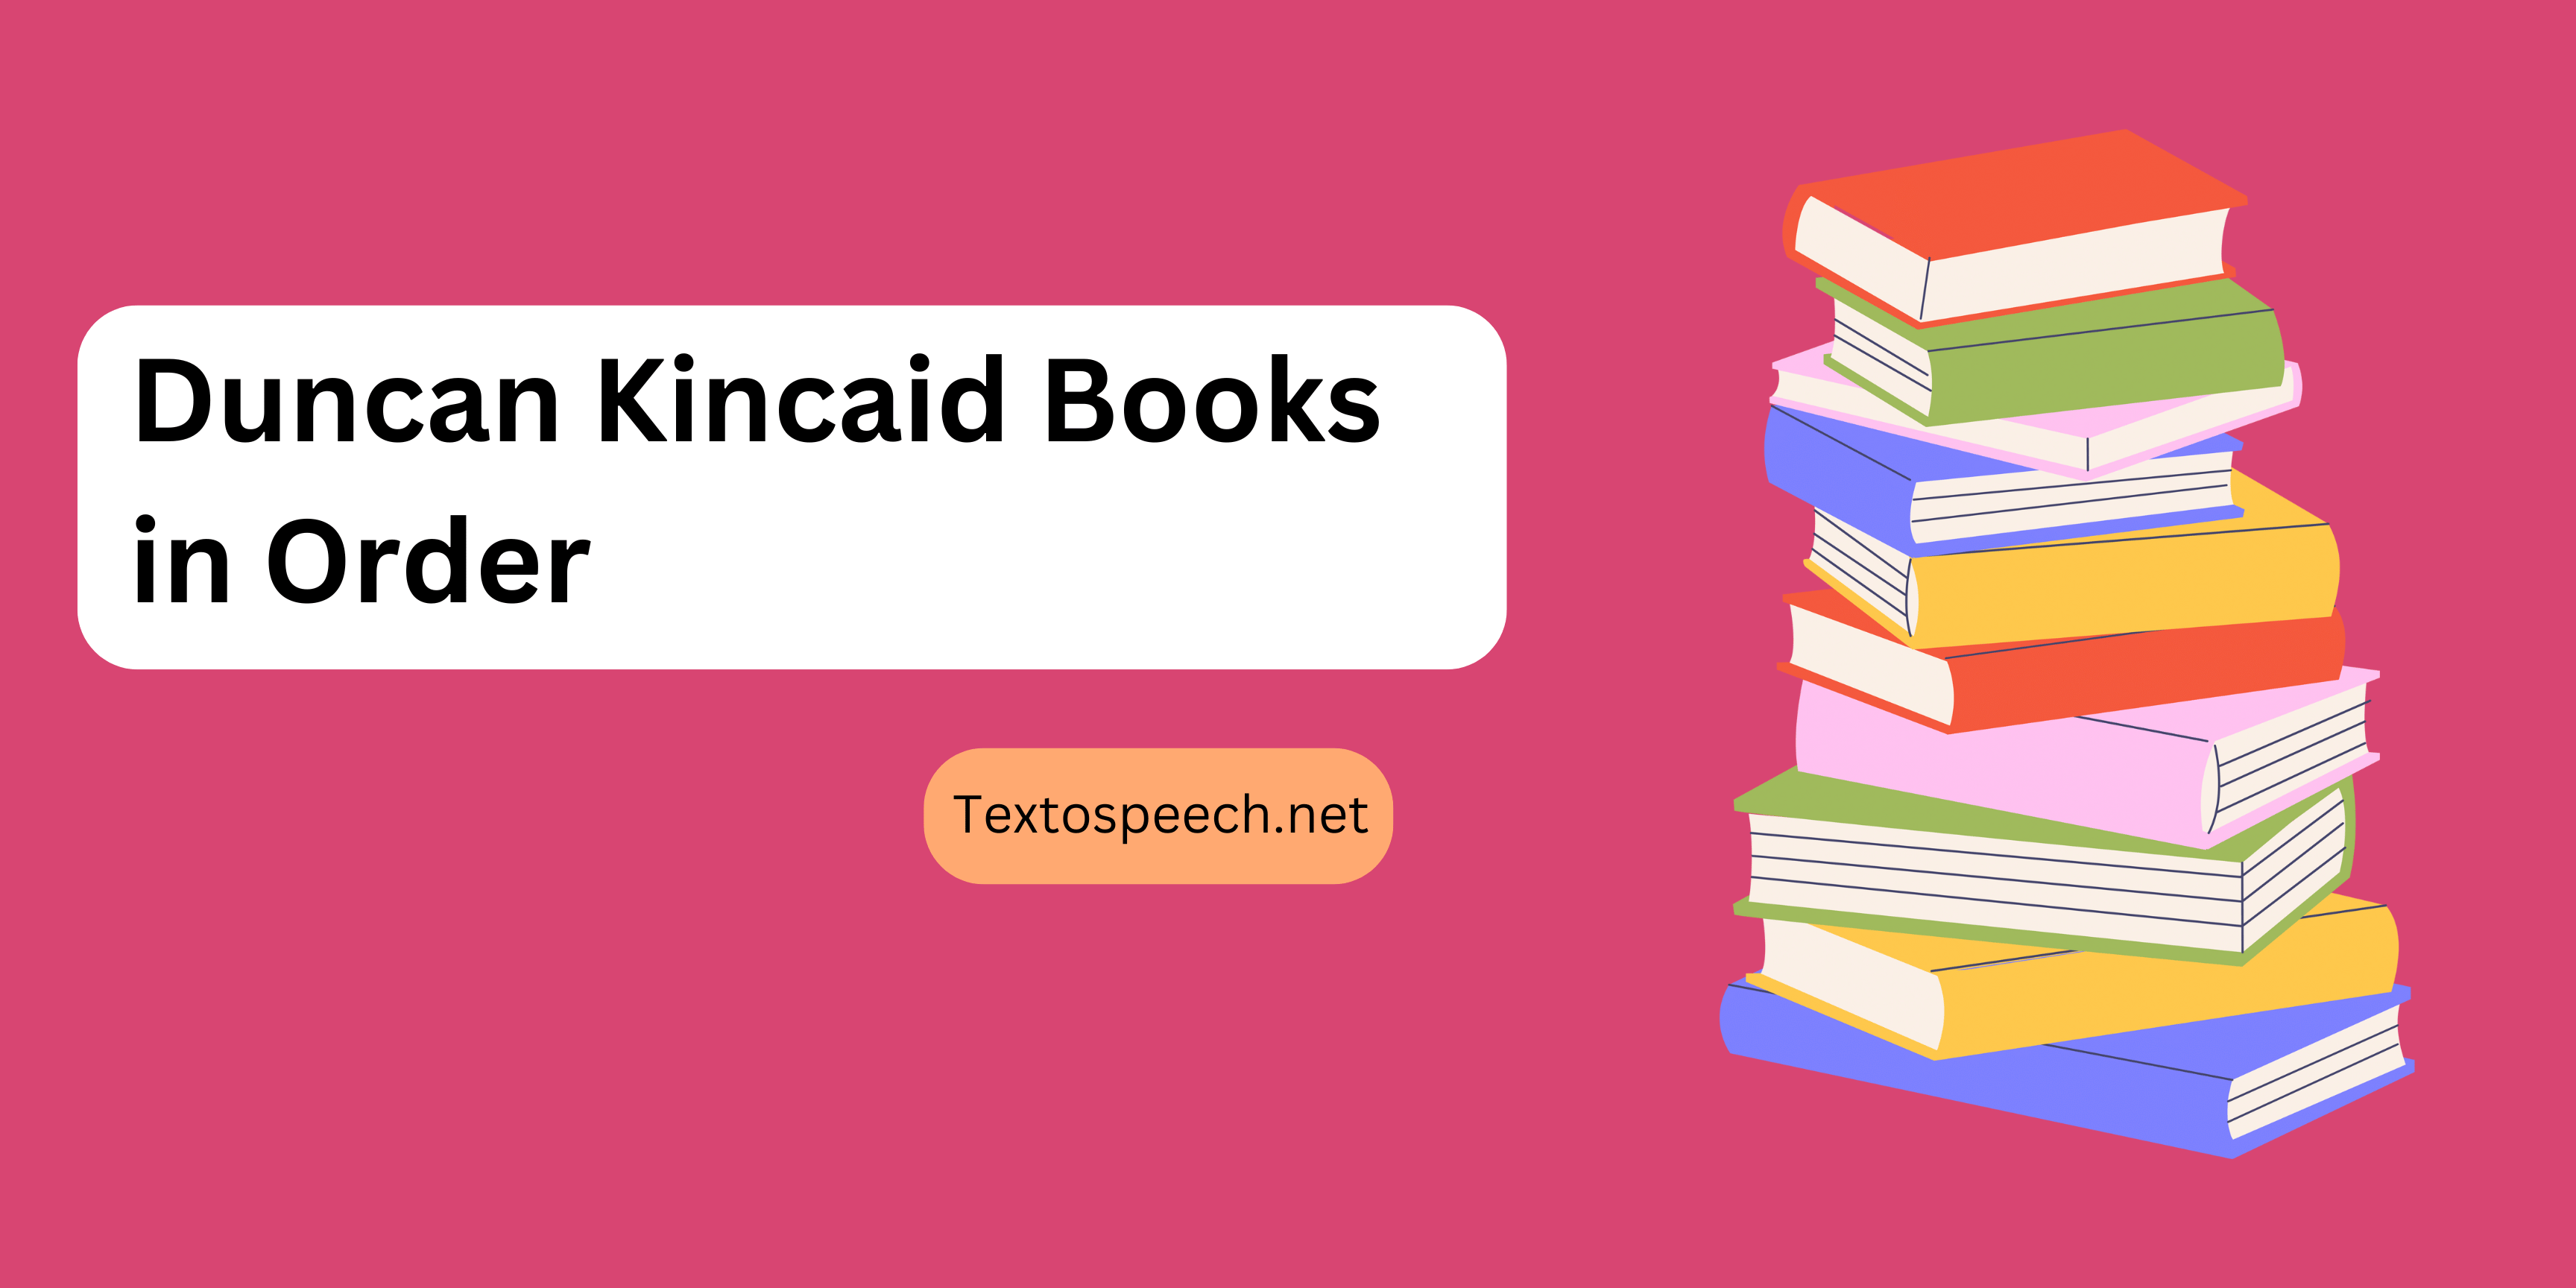 Duncan Kincaid Books in Order